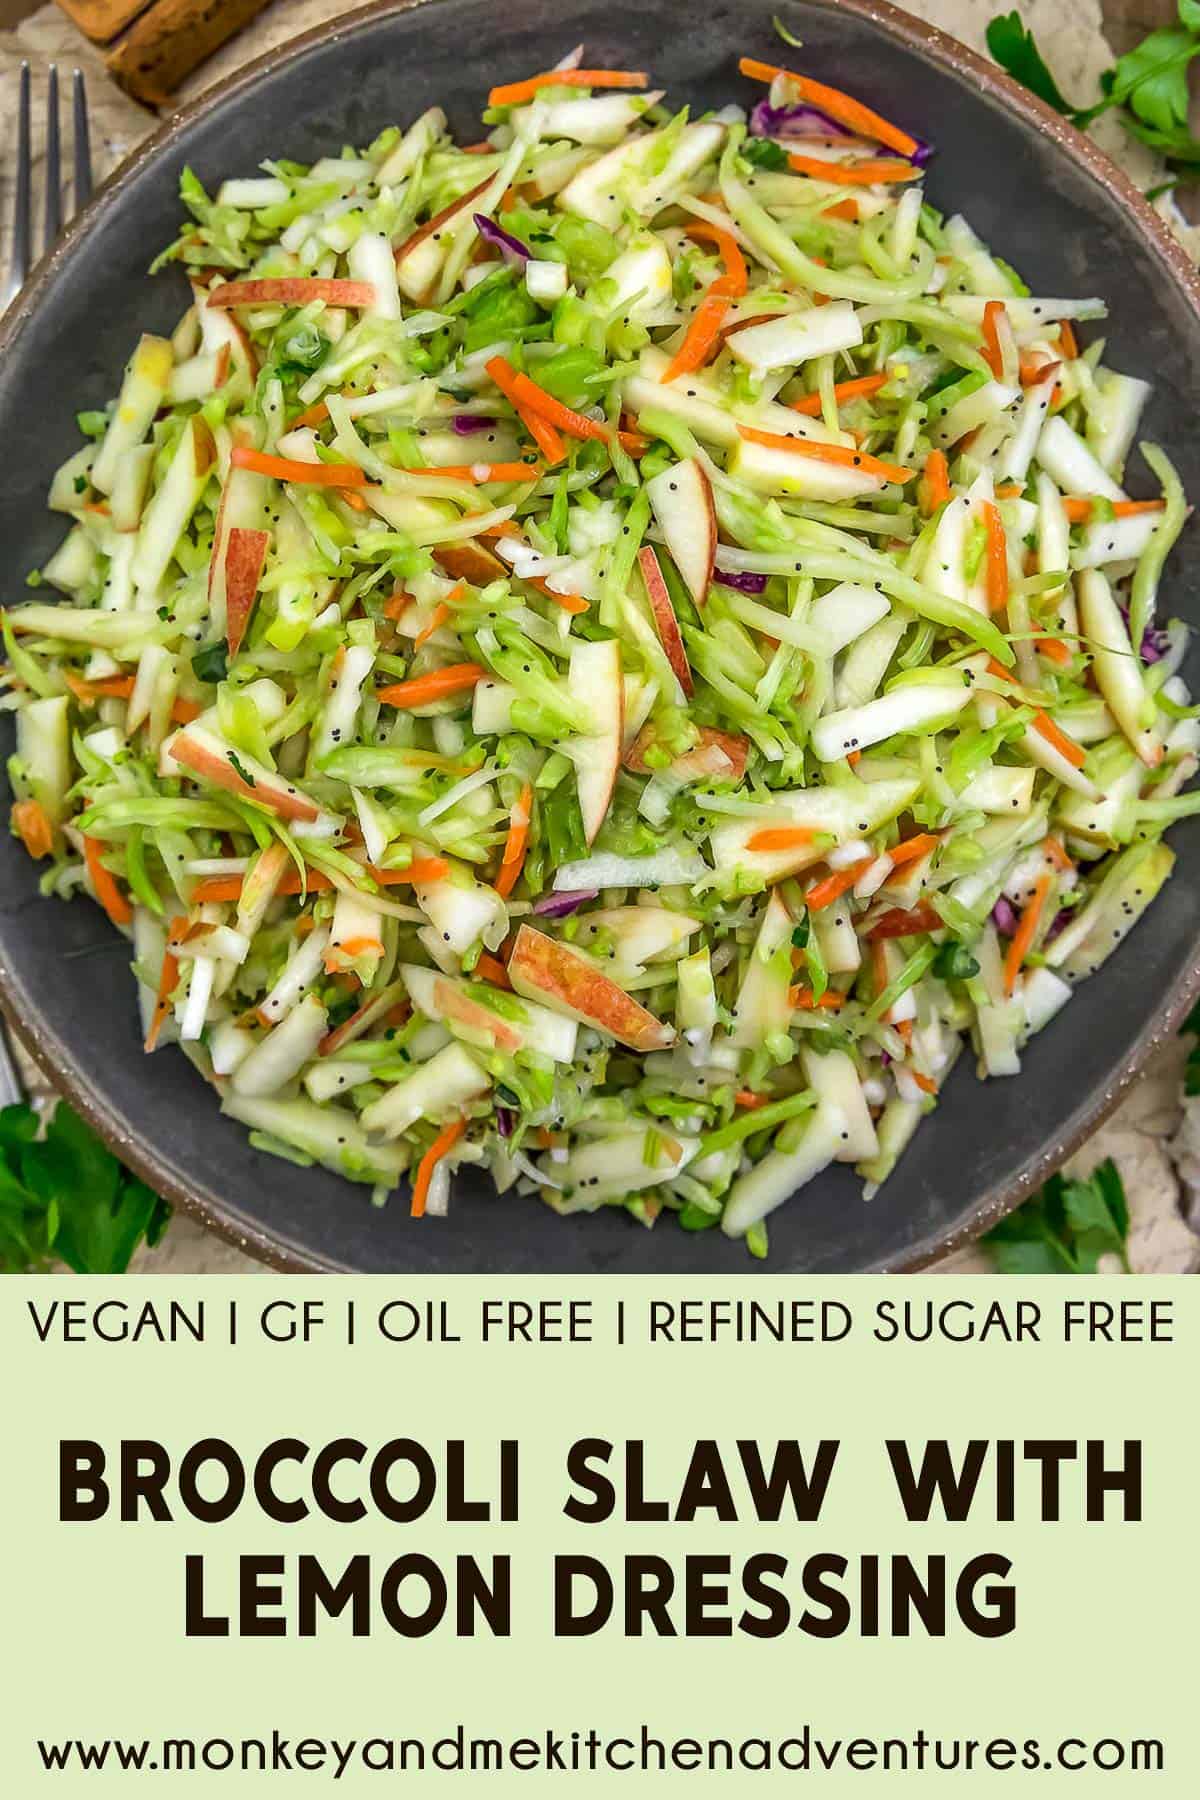 Broccoli Slaw with Lemon Dressing with text description